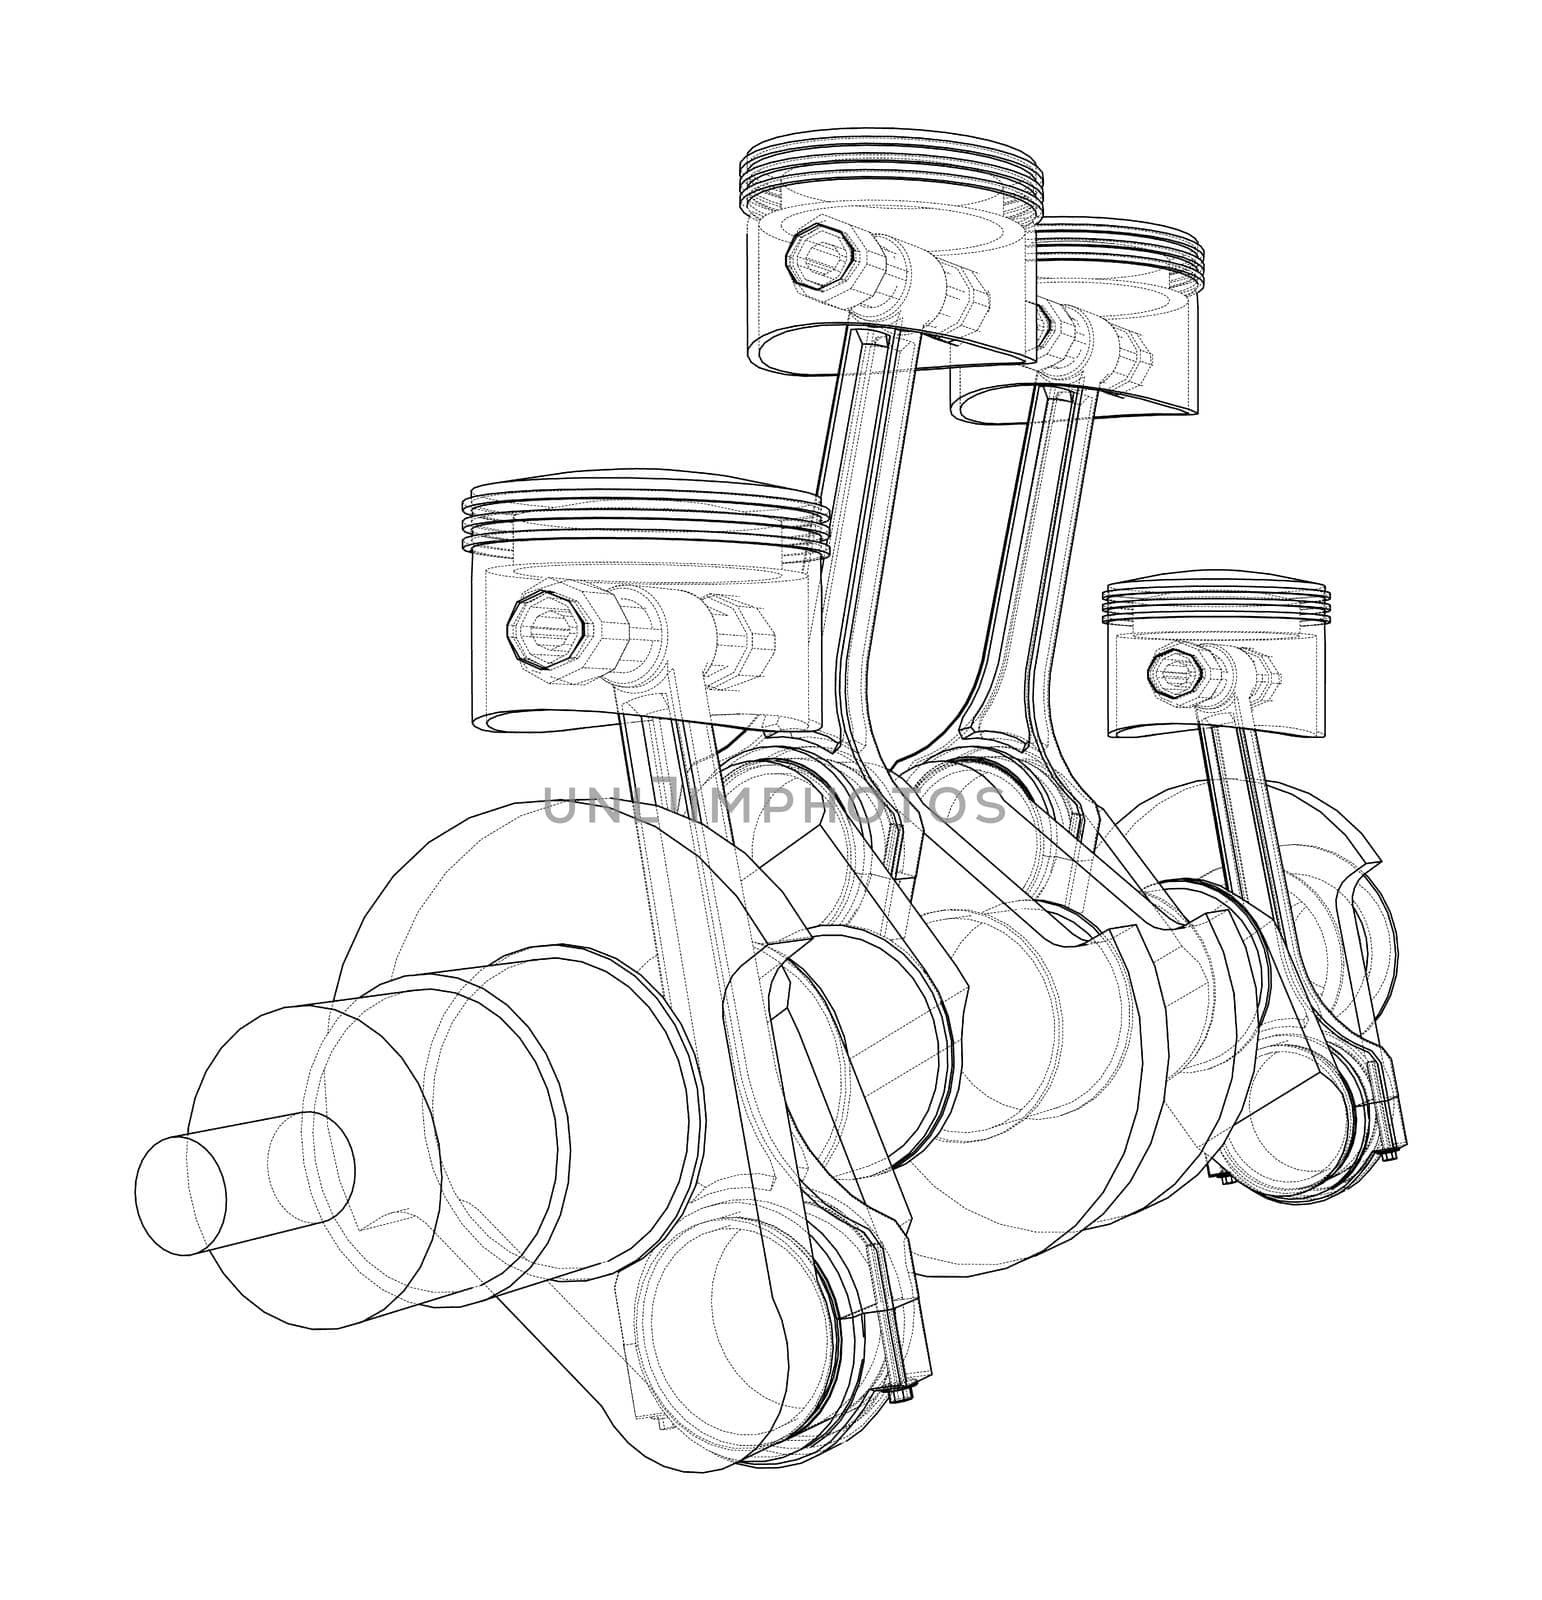 Engine crankshaft with pistons outline. 3d illustration. Wire-frame style